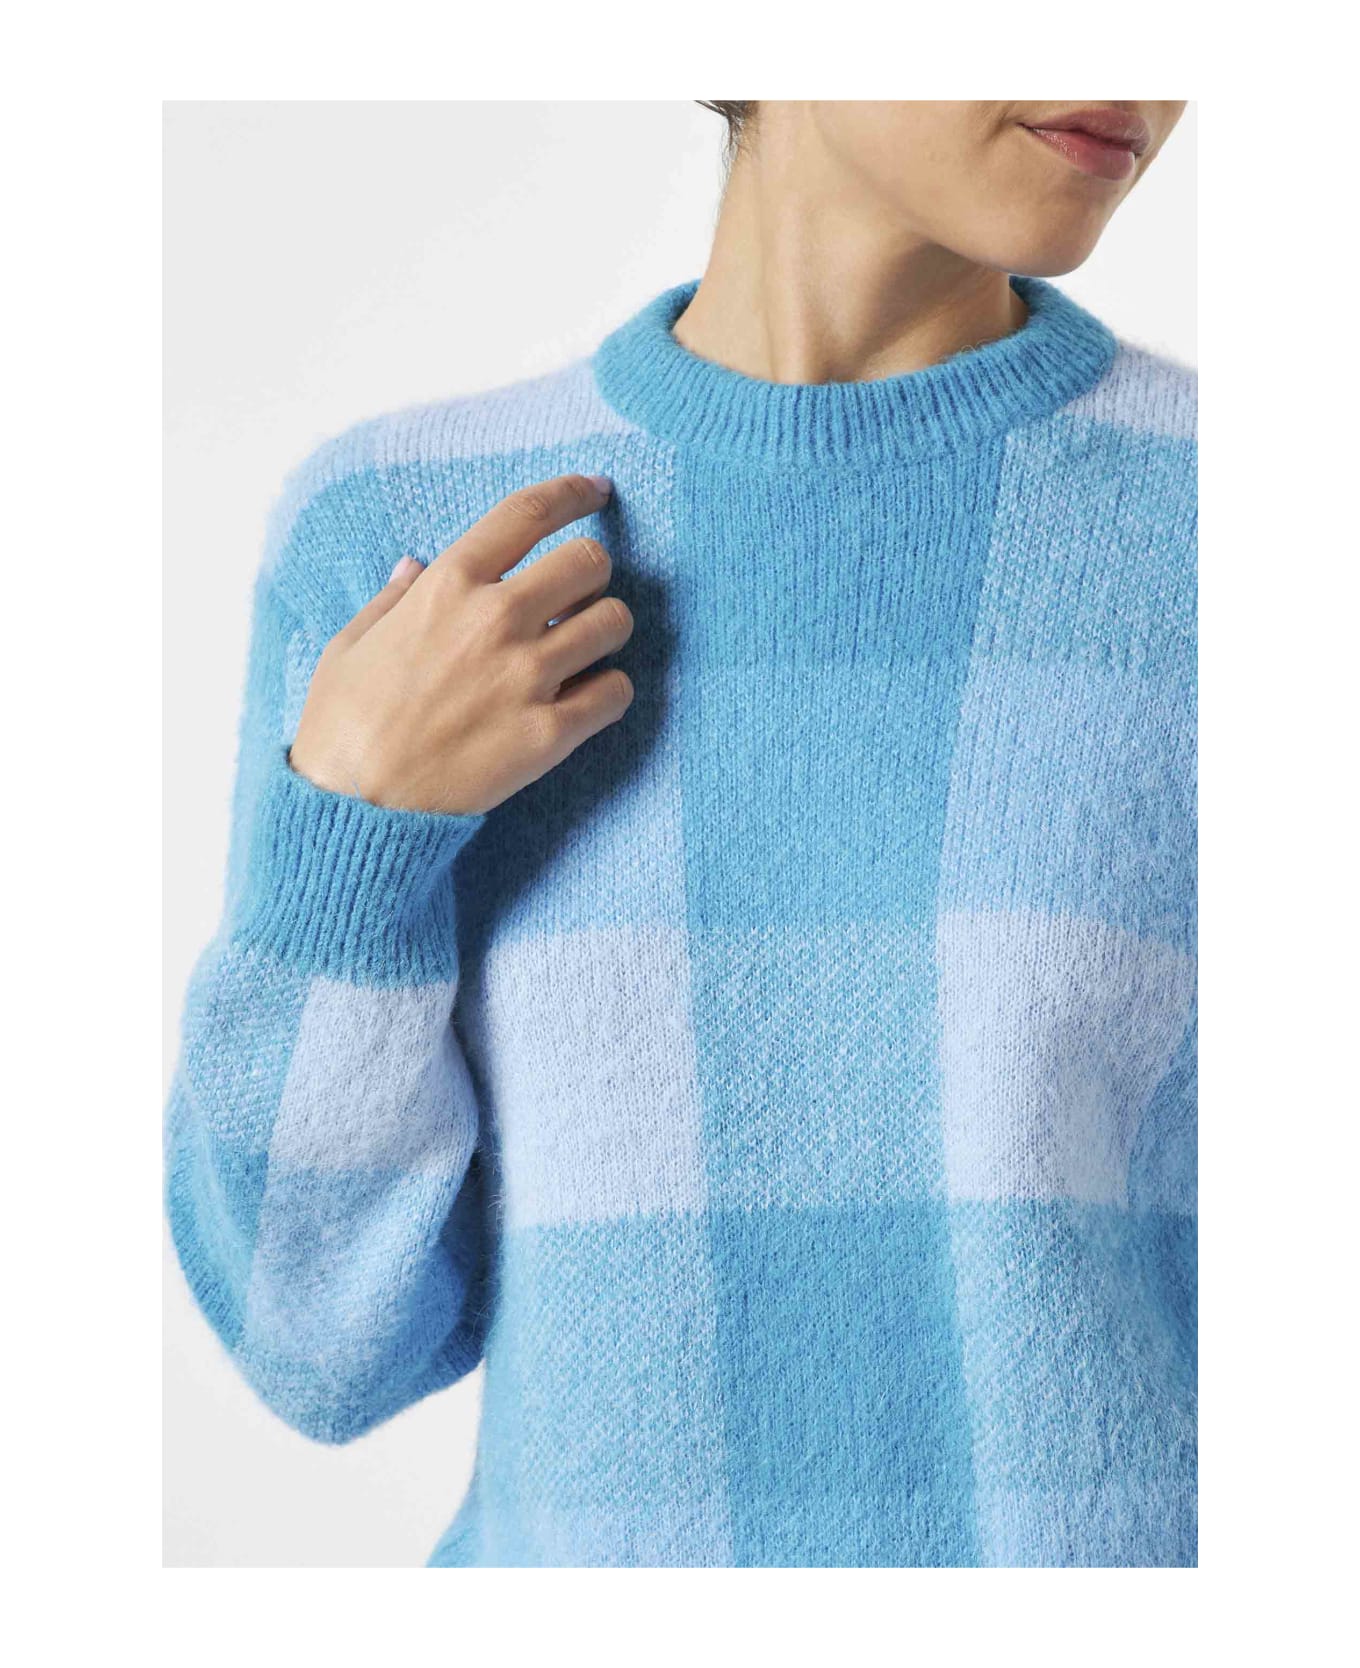 MC2 Saint Barth Woman Brushed Sweater With Check Pattern - BLUE